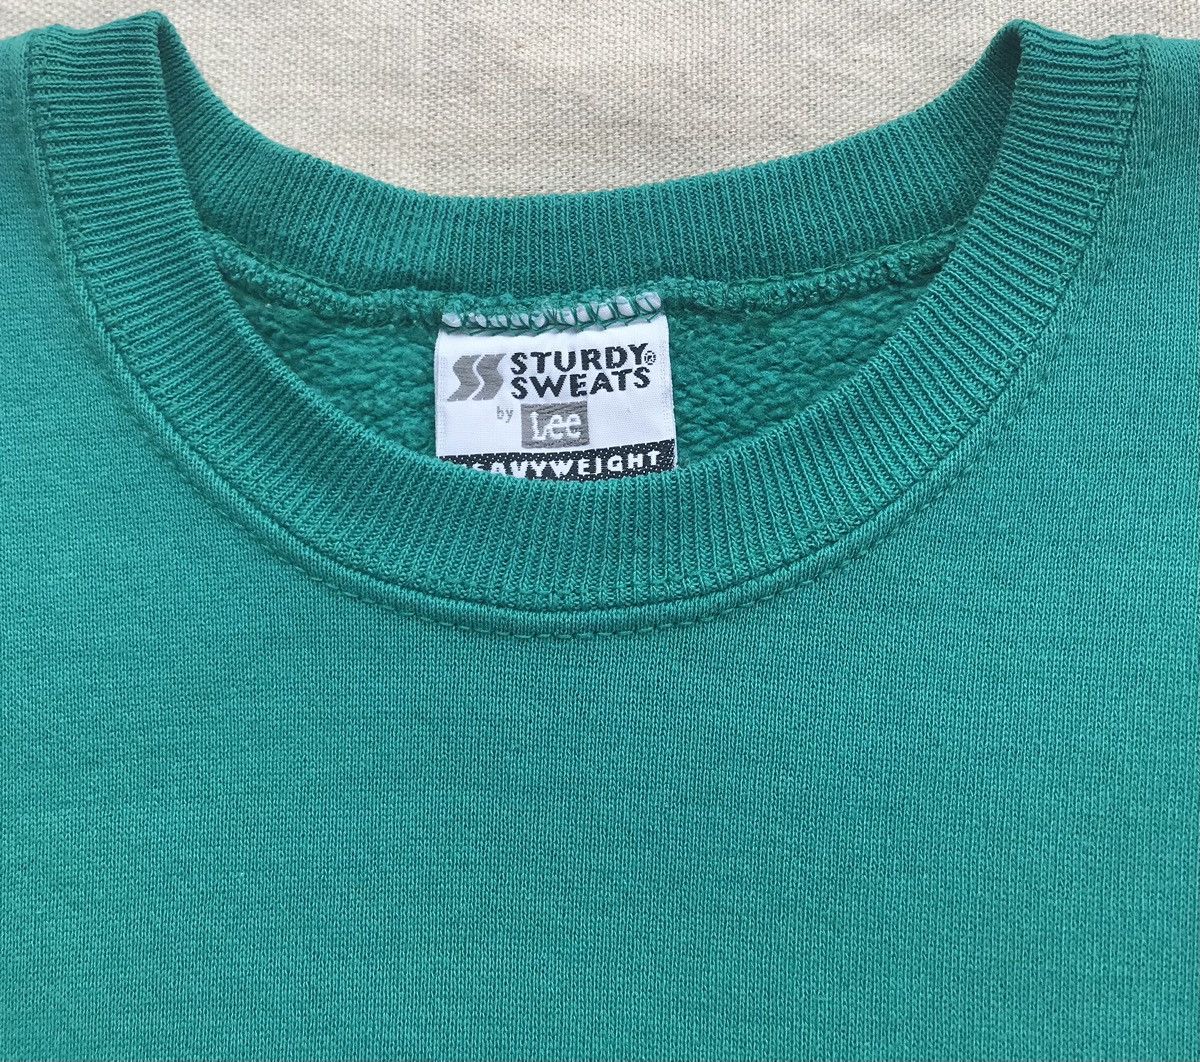 Lee VTG 90s Lee Heavyweight Turquoise Blank Sweatshirt Small Size US S / EU 44-46 / 1 - 4 Thumbnail